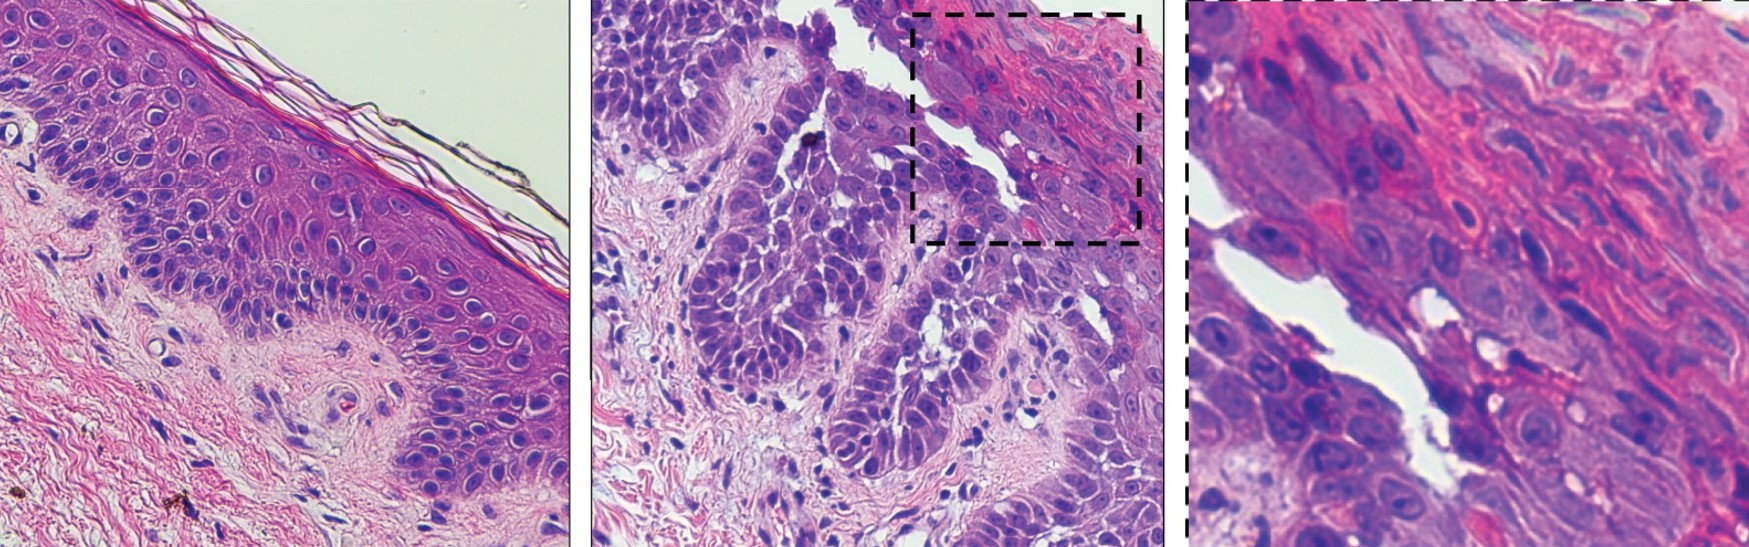 Cell pathology